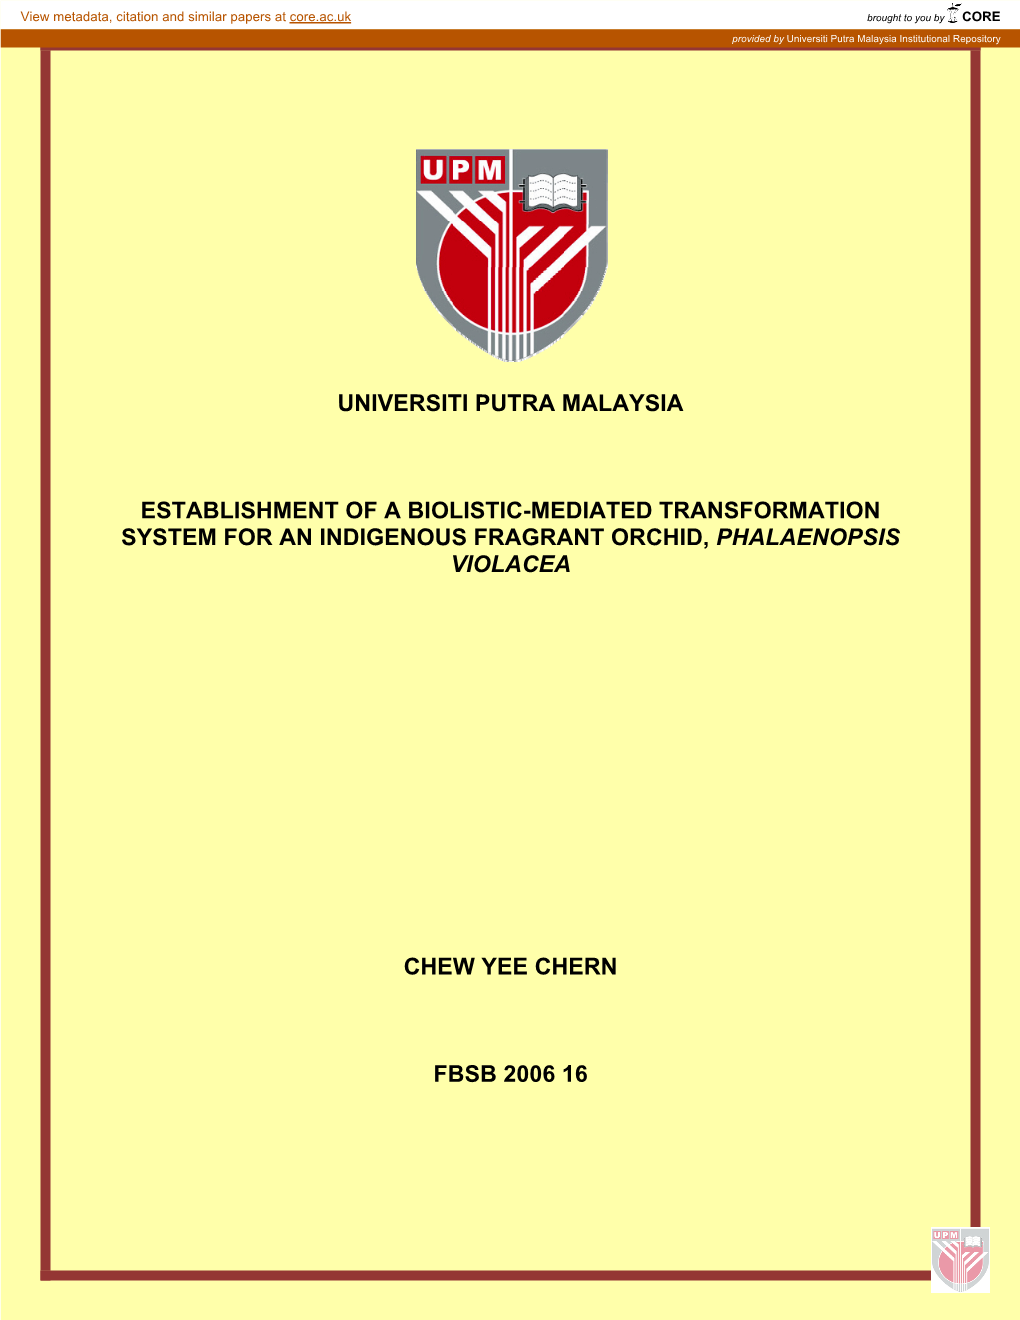 Universiti Putra Malaysia Establishment of a Biolistic